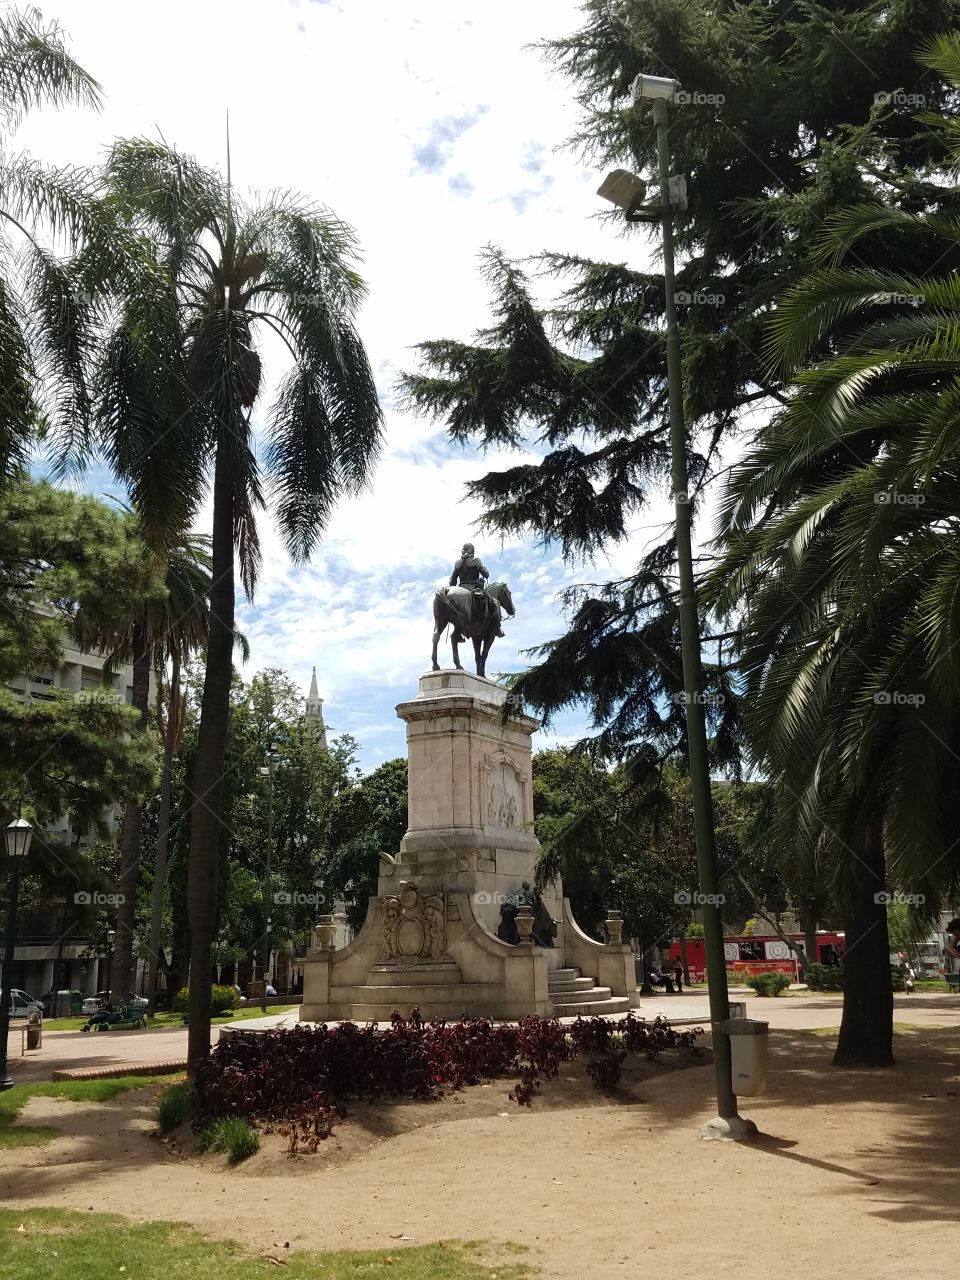 Plaza in Old City, Montevideo Uruguay